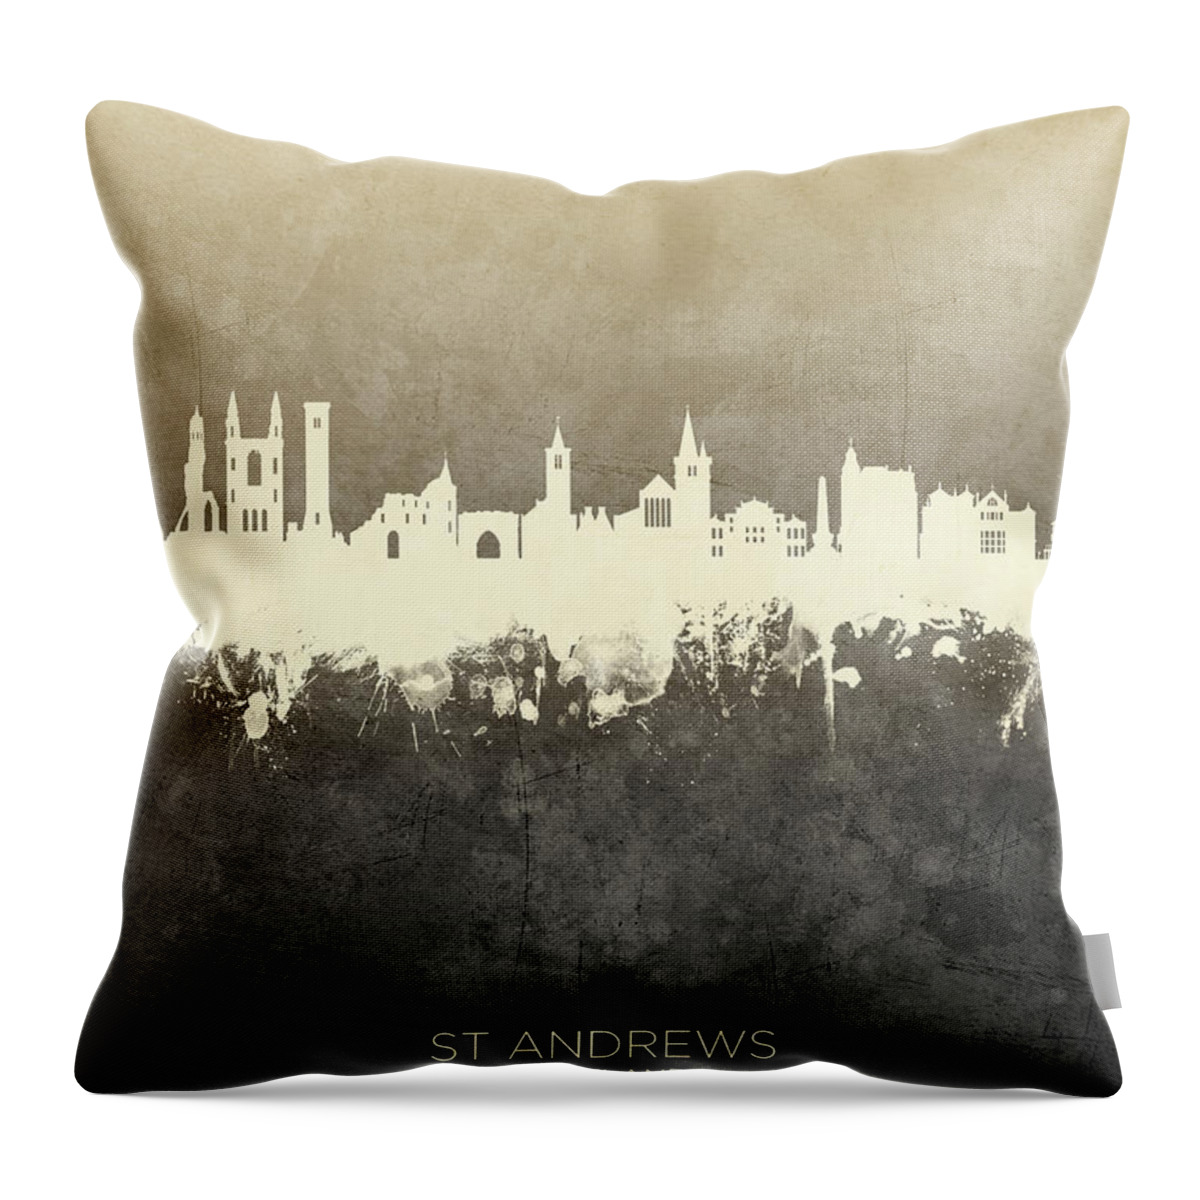 St Andrews Throw Pillow featuring the digital art St Andrews Scotland Skyline by Michael Tompsett